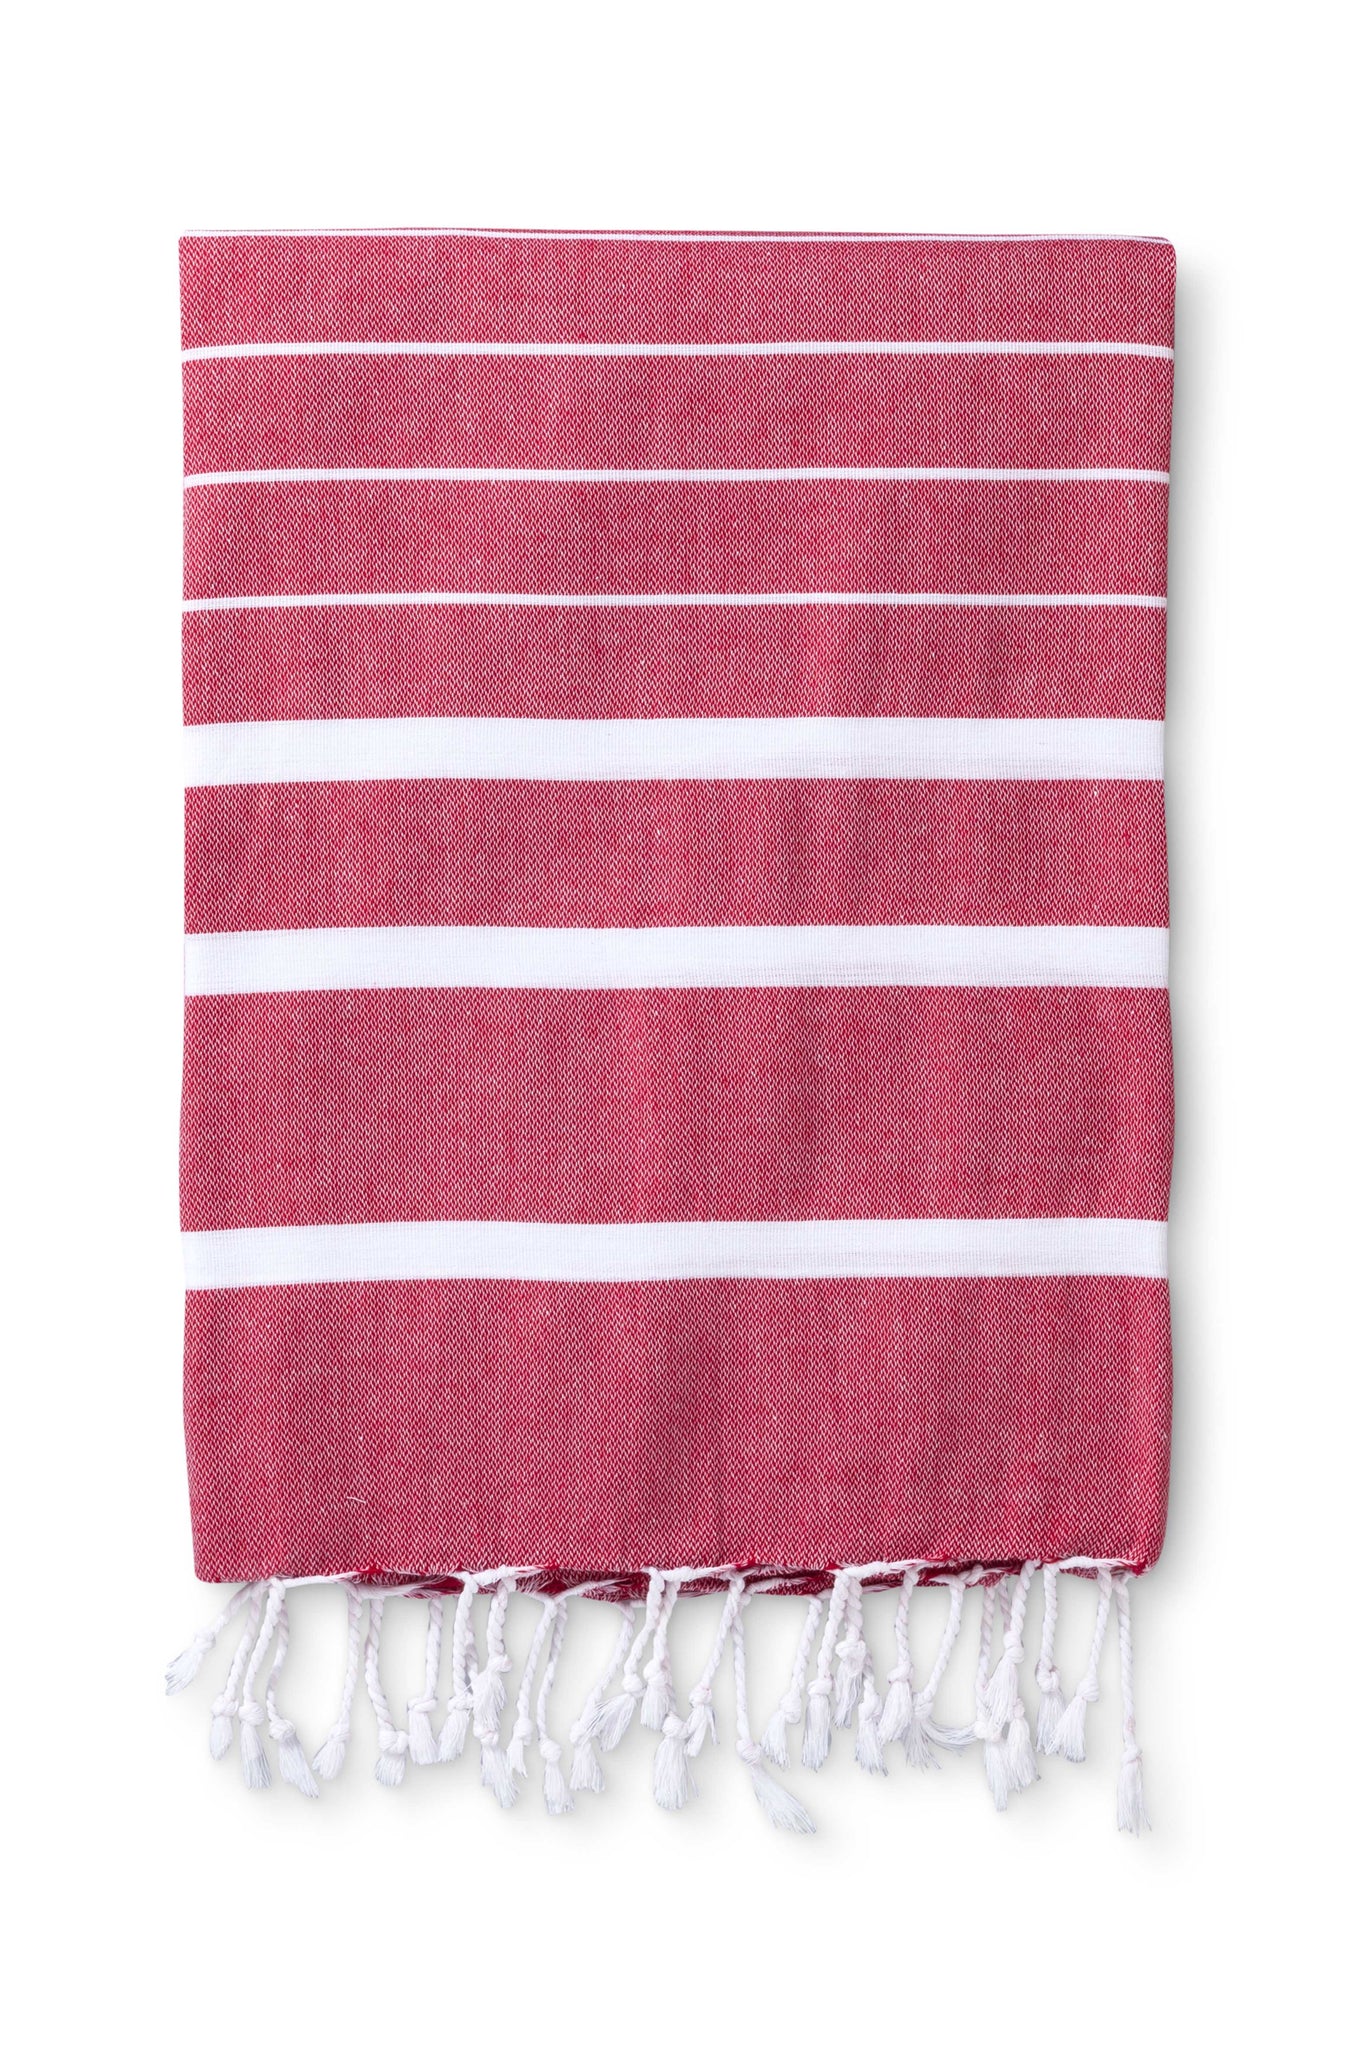 Red hammam towels